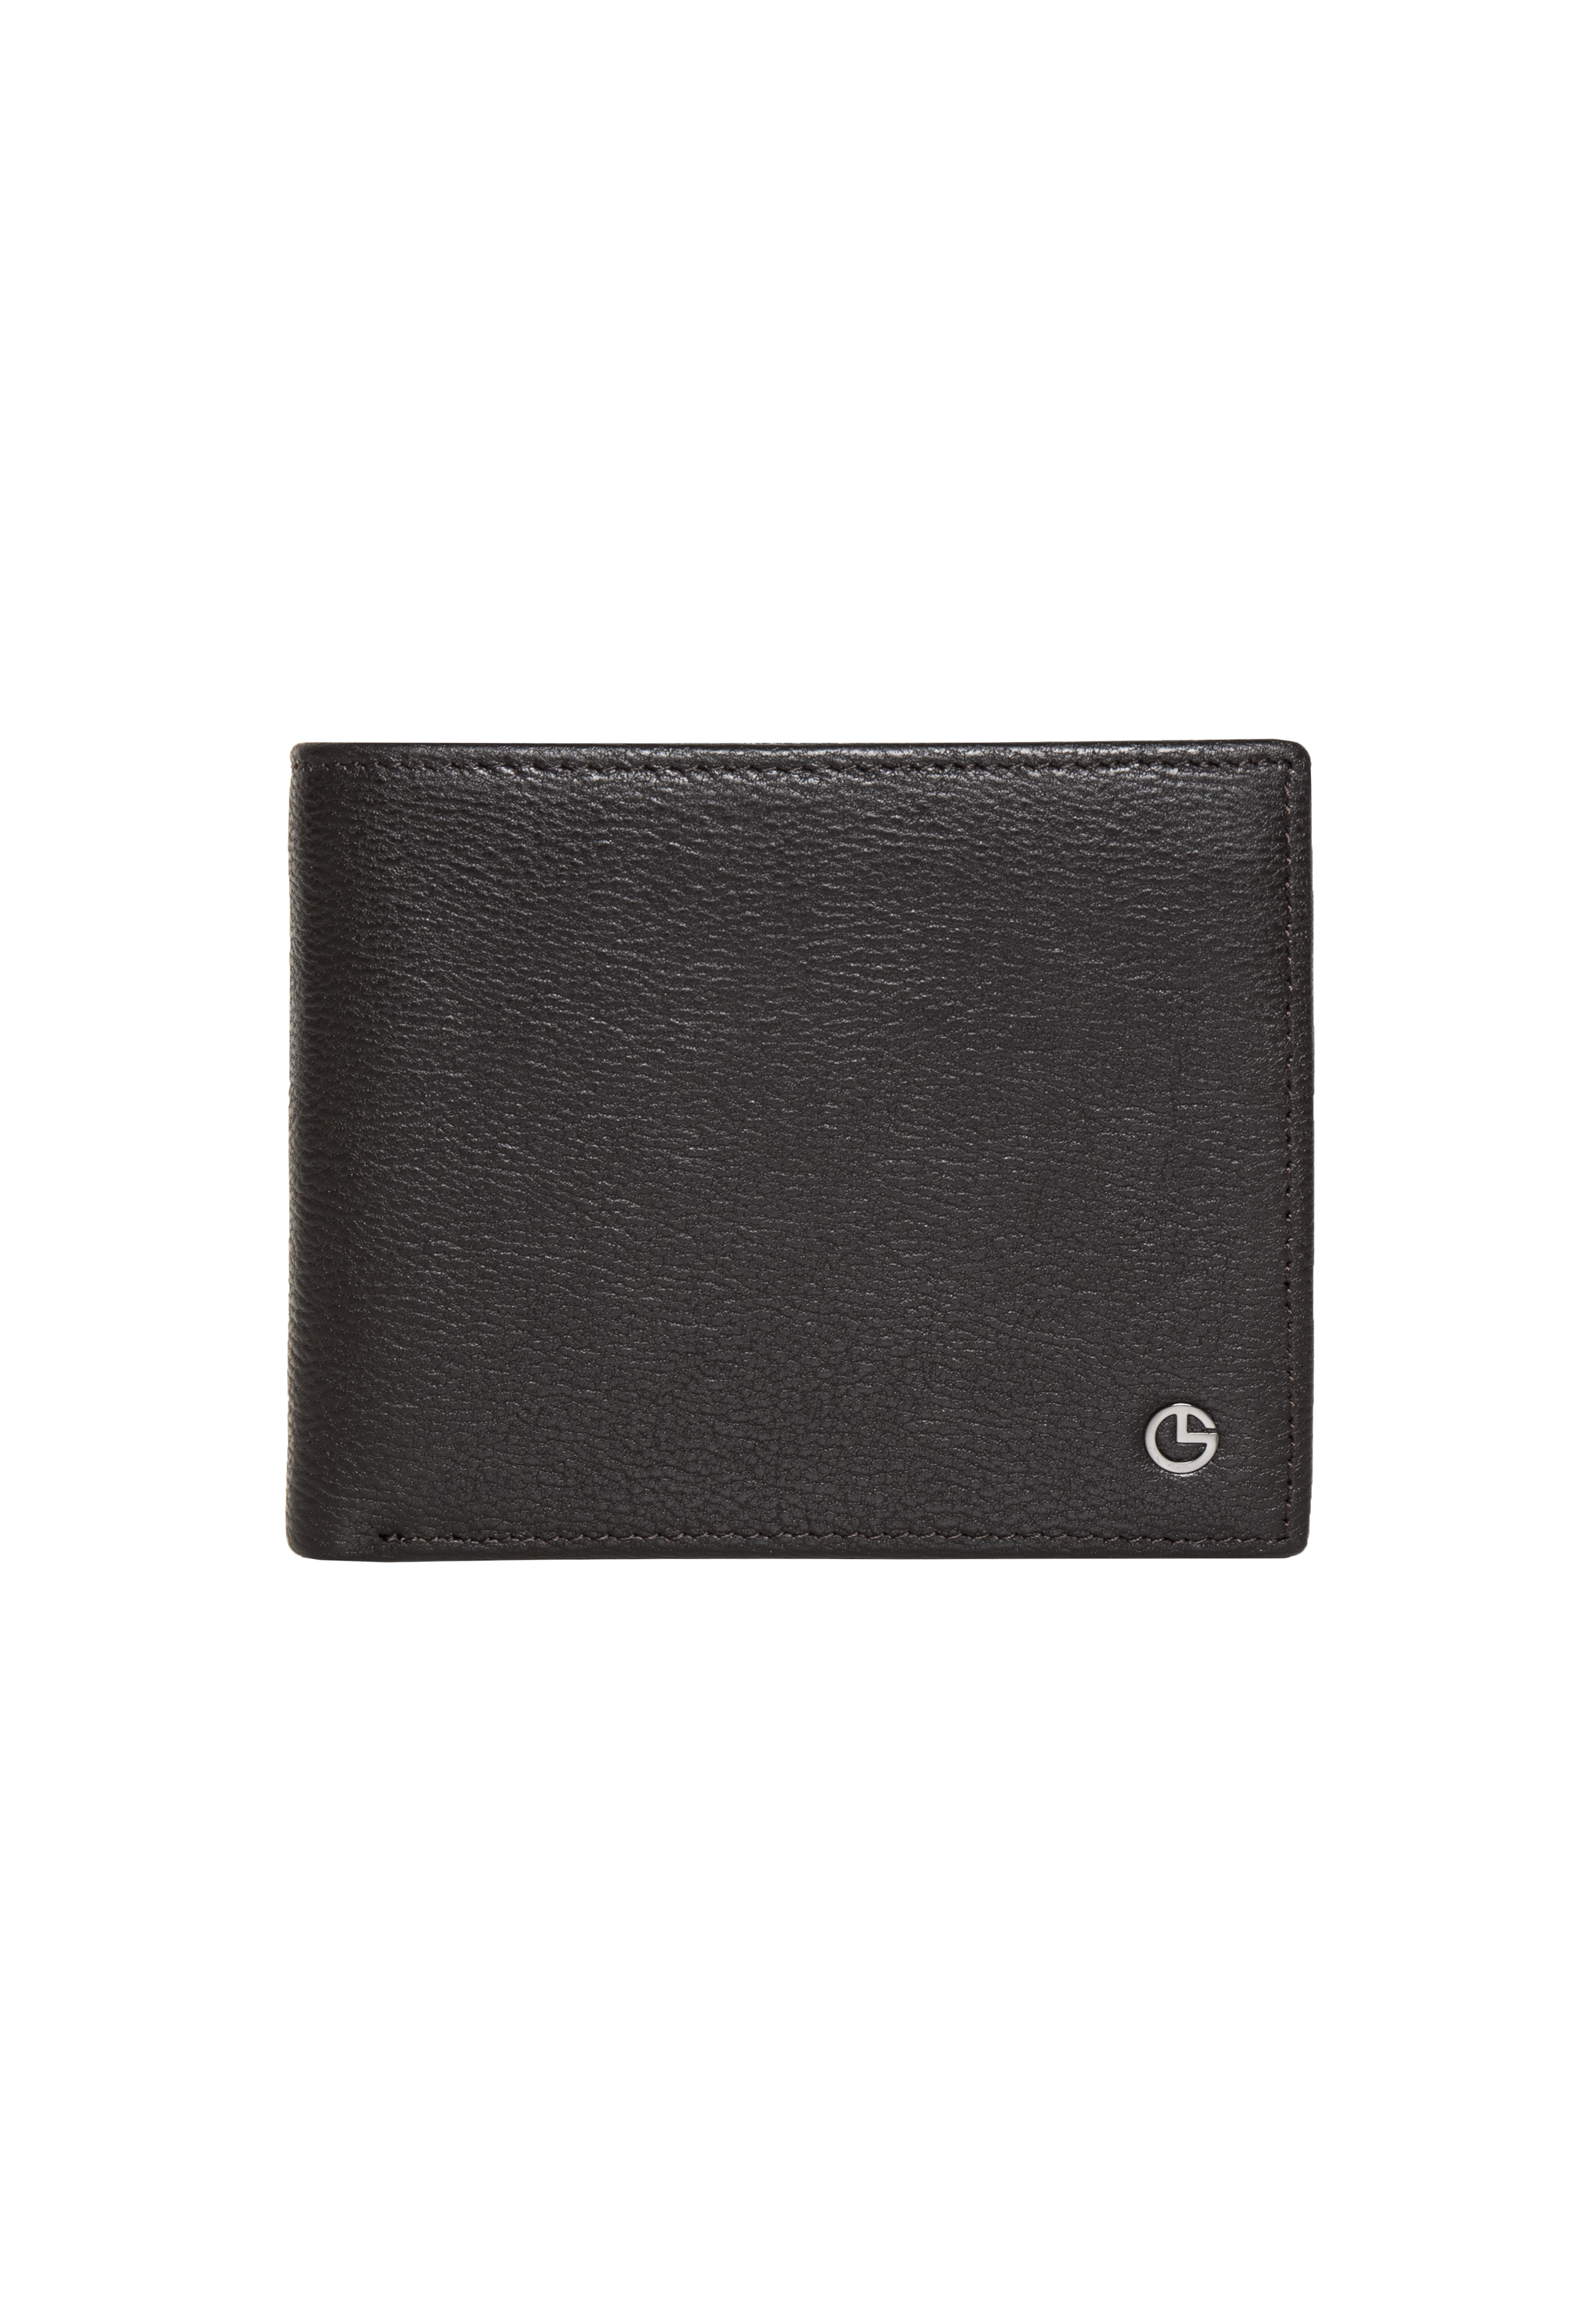 [Online Exclusive] Goldlion Men Genuine Leather Wallet (12 Cards Slot, 2 Window Compartment, Center Flap)